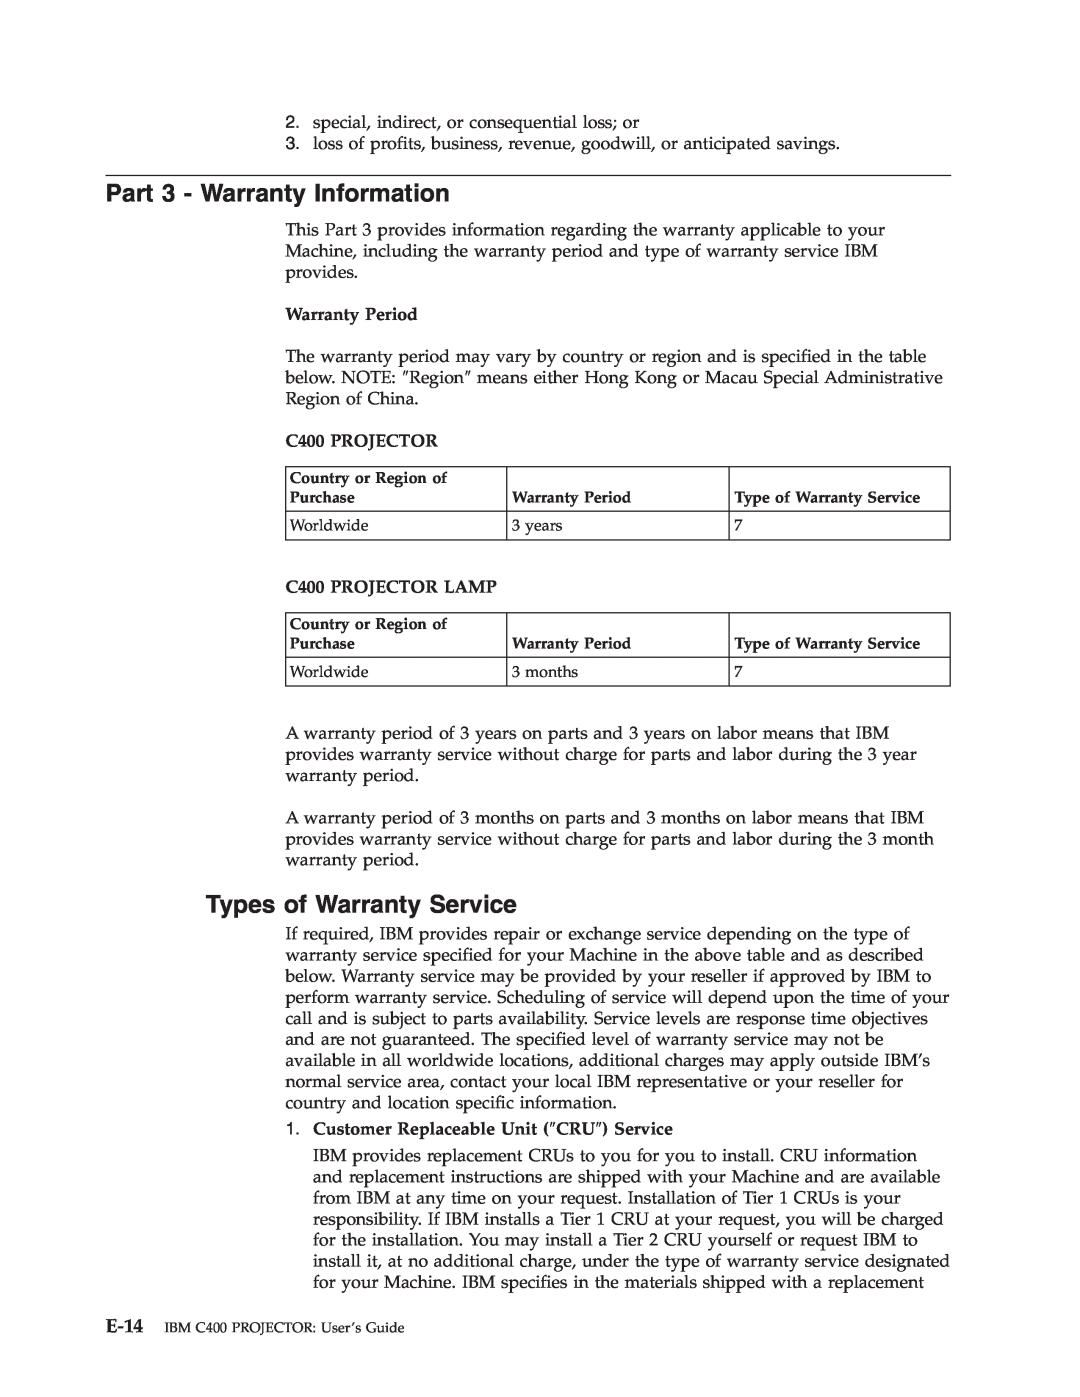 IBM PROJECTOR C400 manual Part 3 - Warranty Information, Types of Warranty Service, Warranty Period, C400 PROJECTOR 